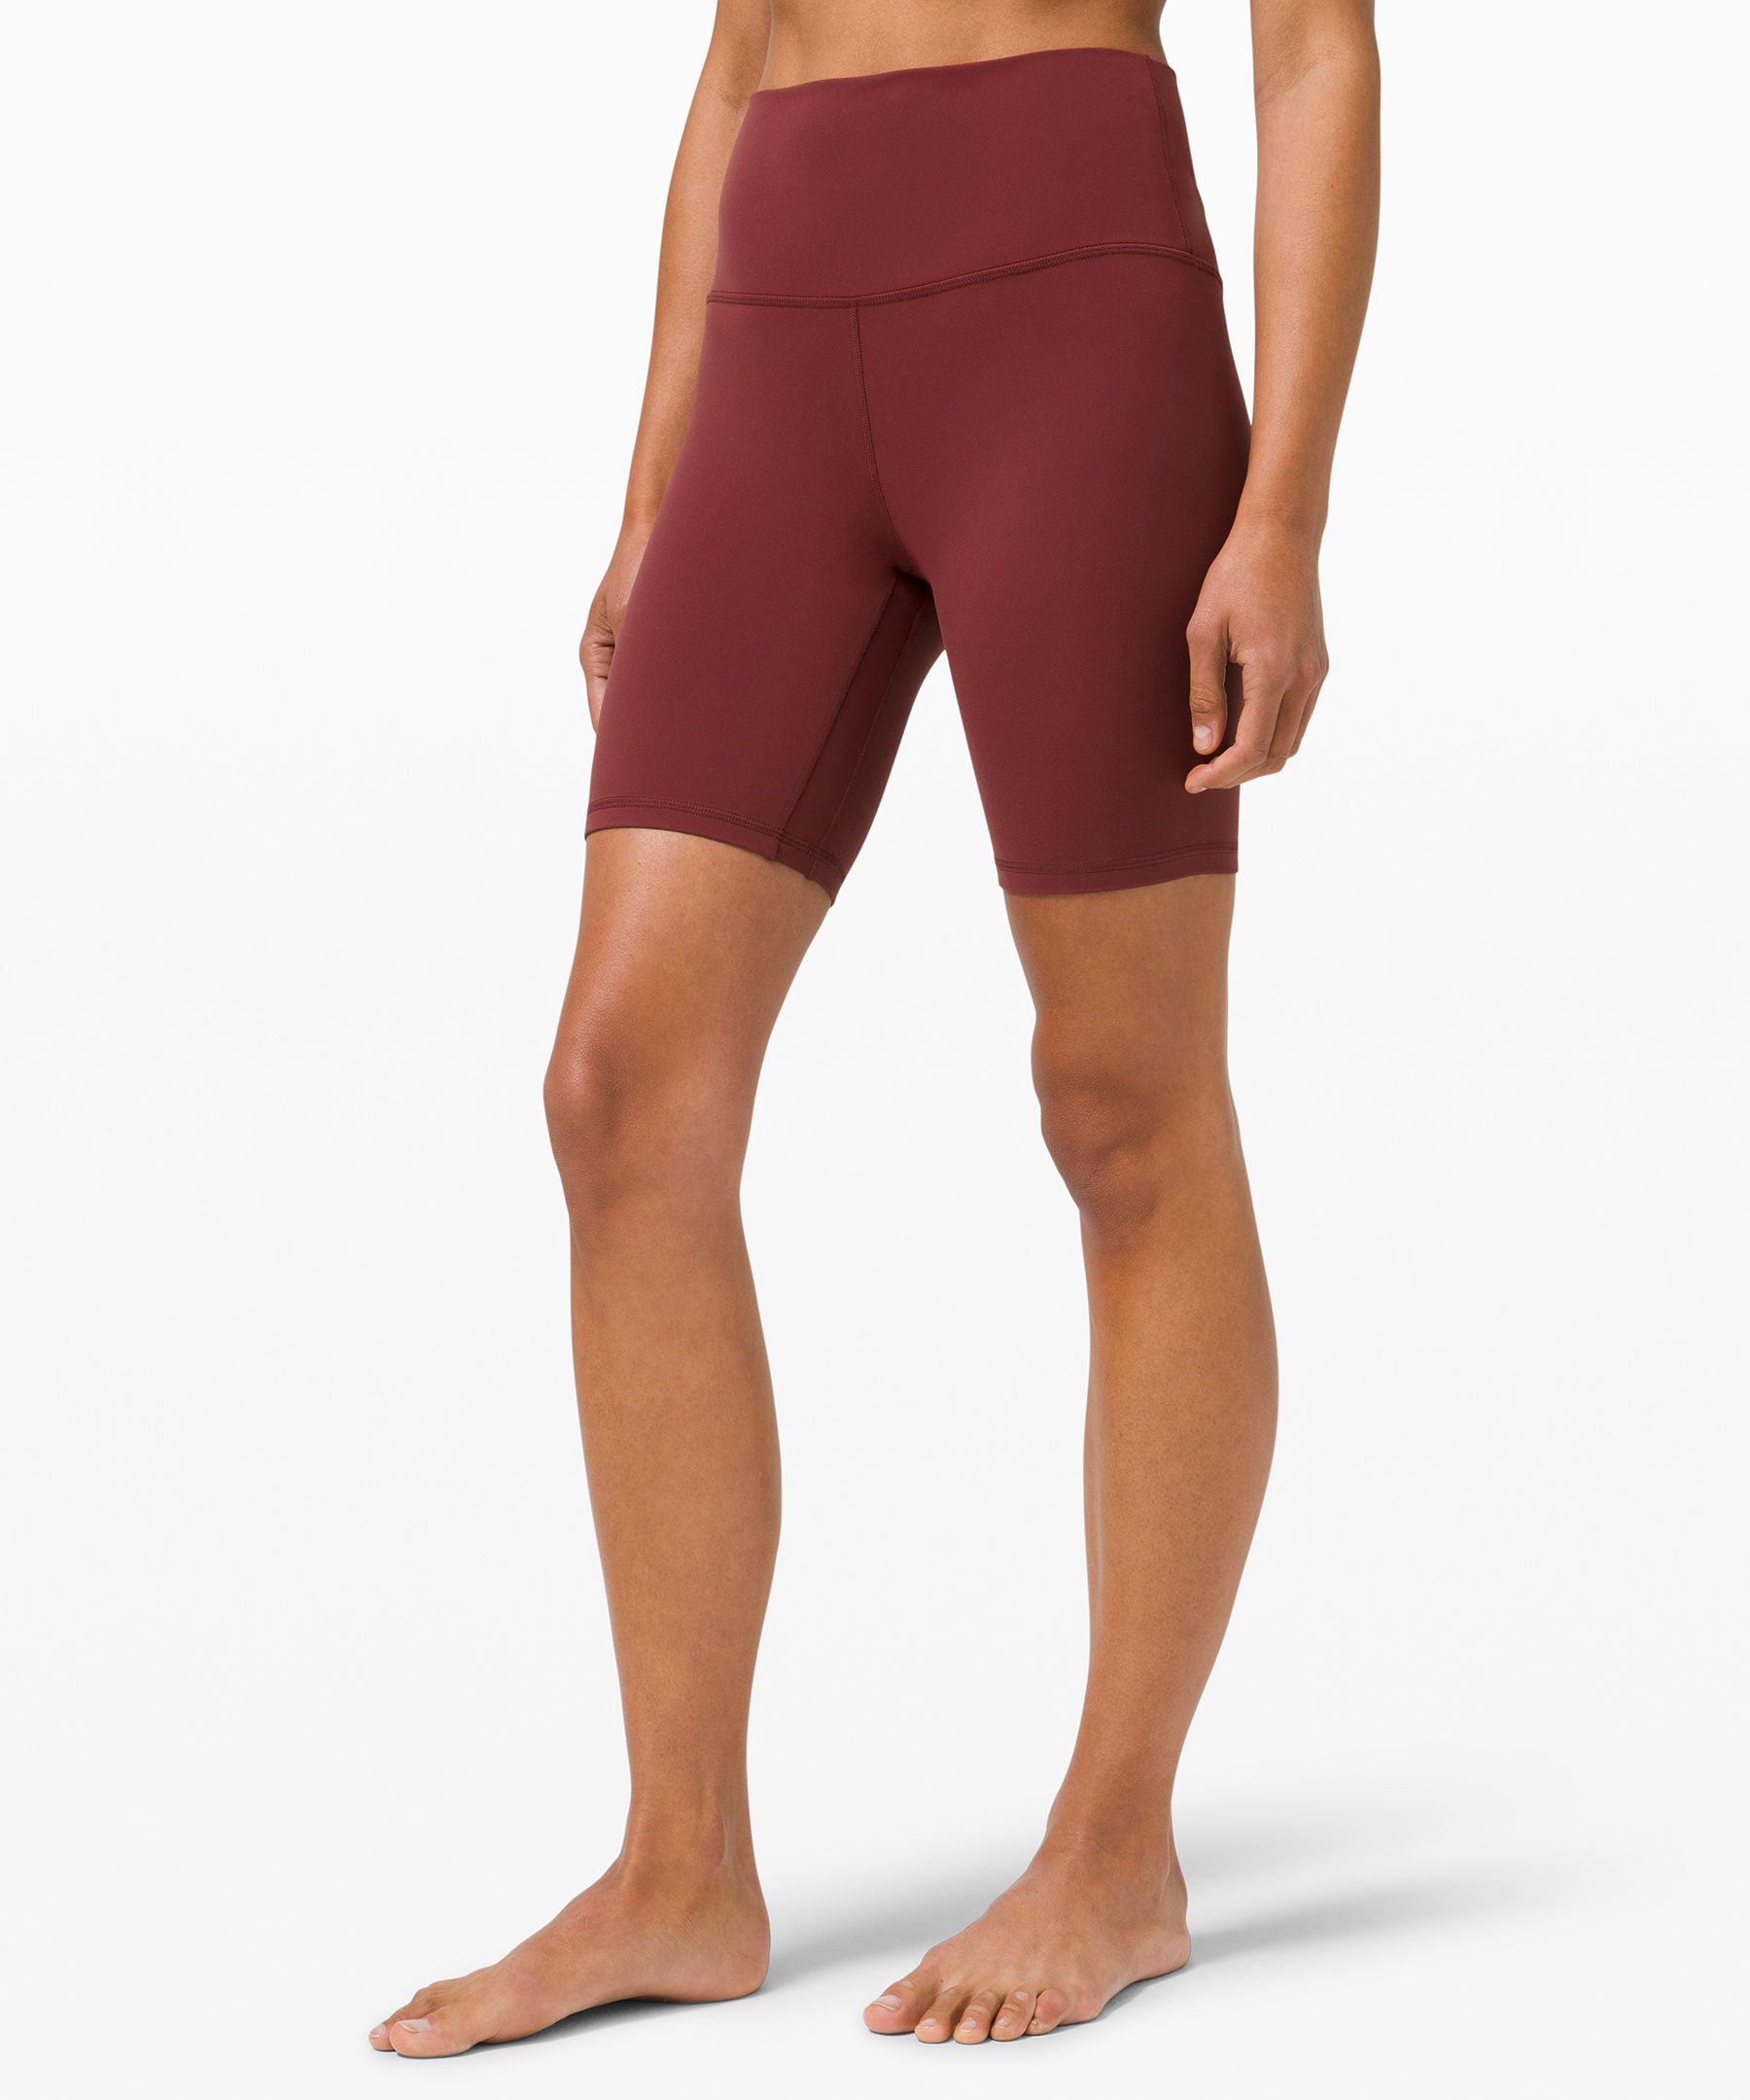 Lululemon Align™ High-rise Shorts With Pockets 8 - Mulled Wine